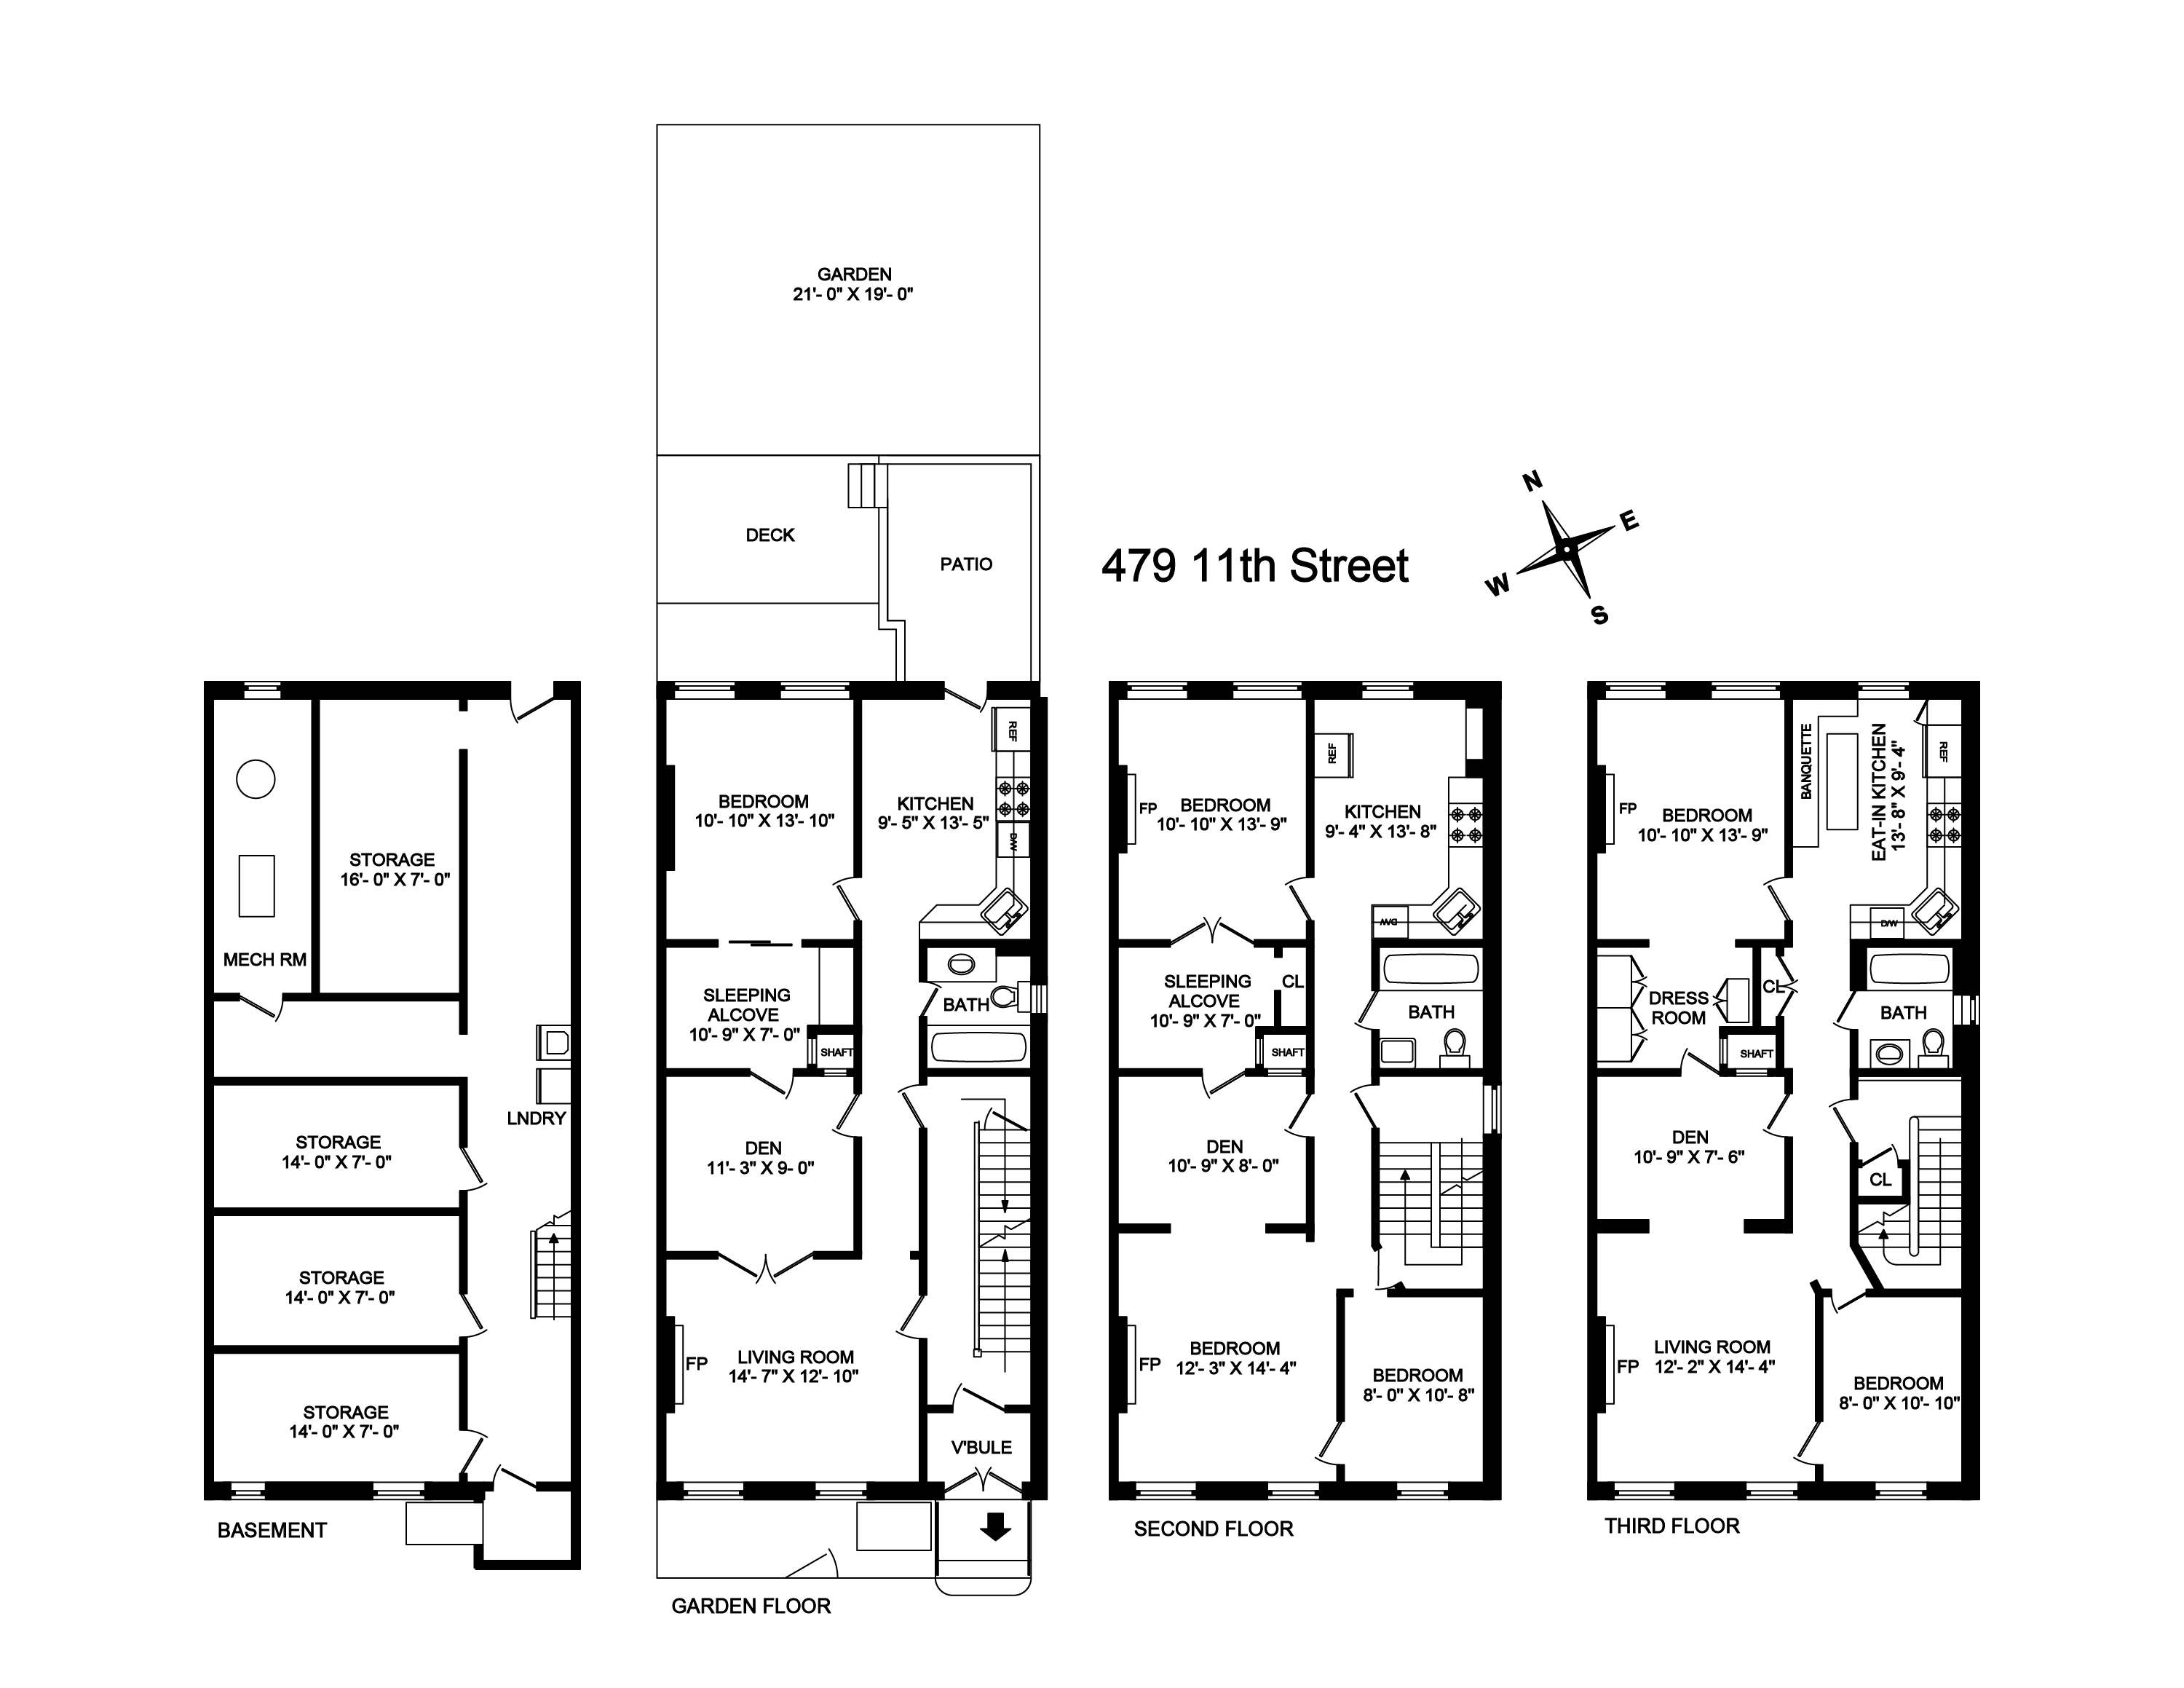 Floorplan of 479 11th St